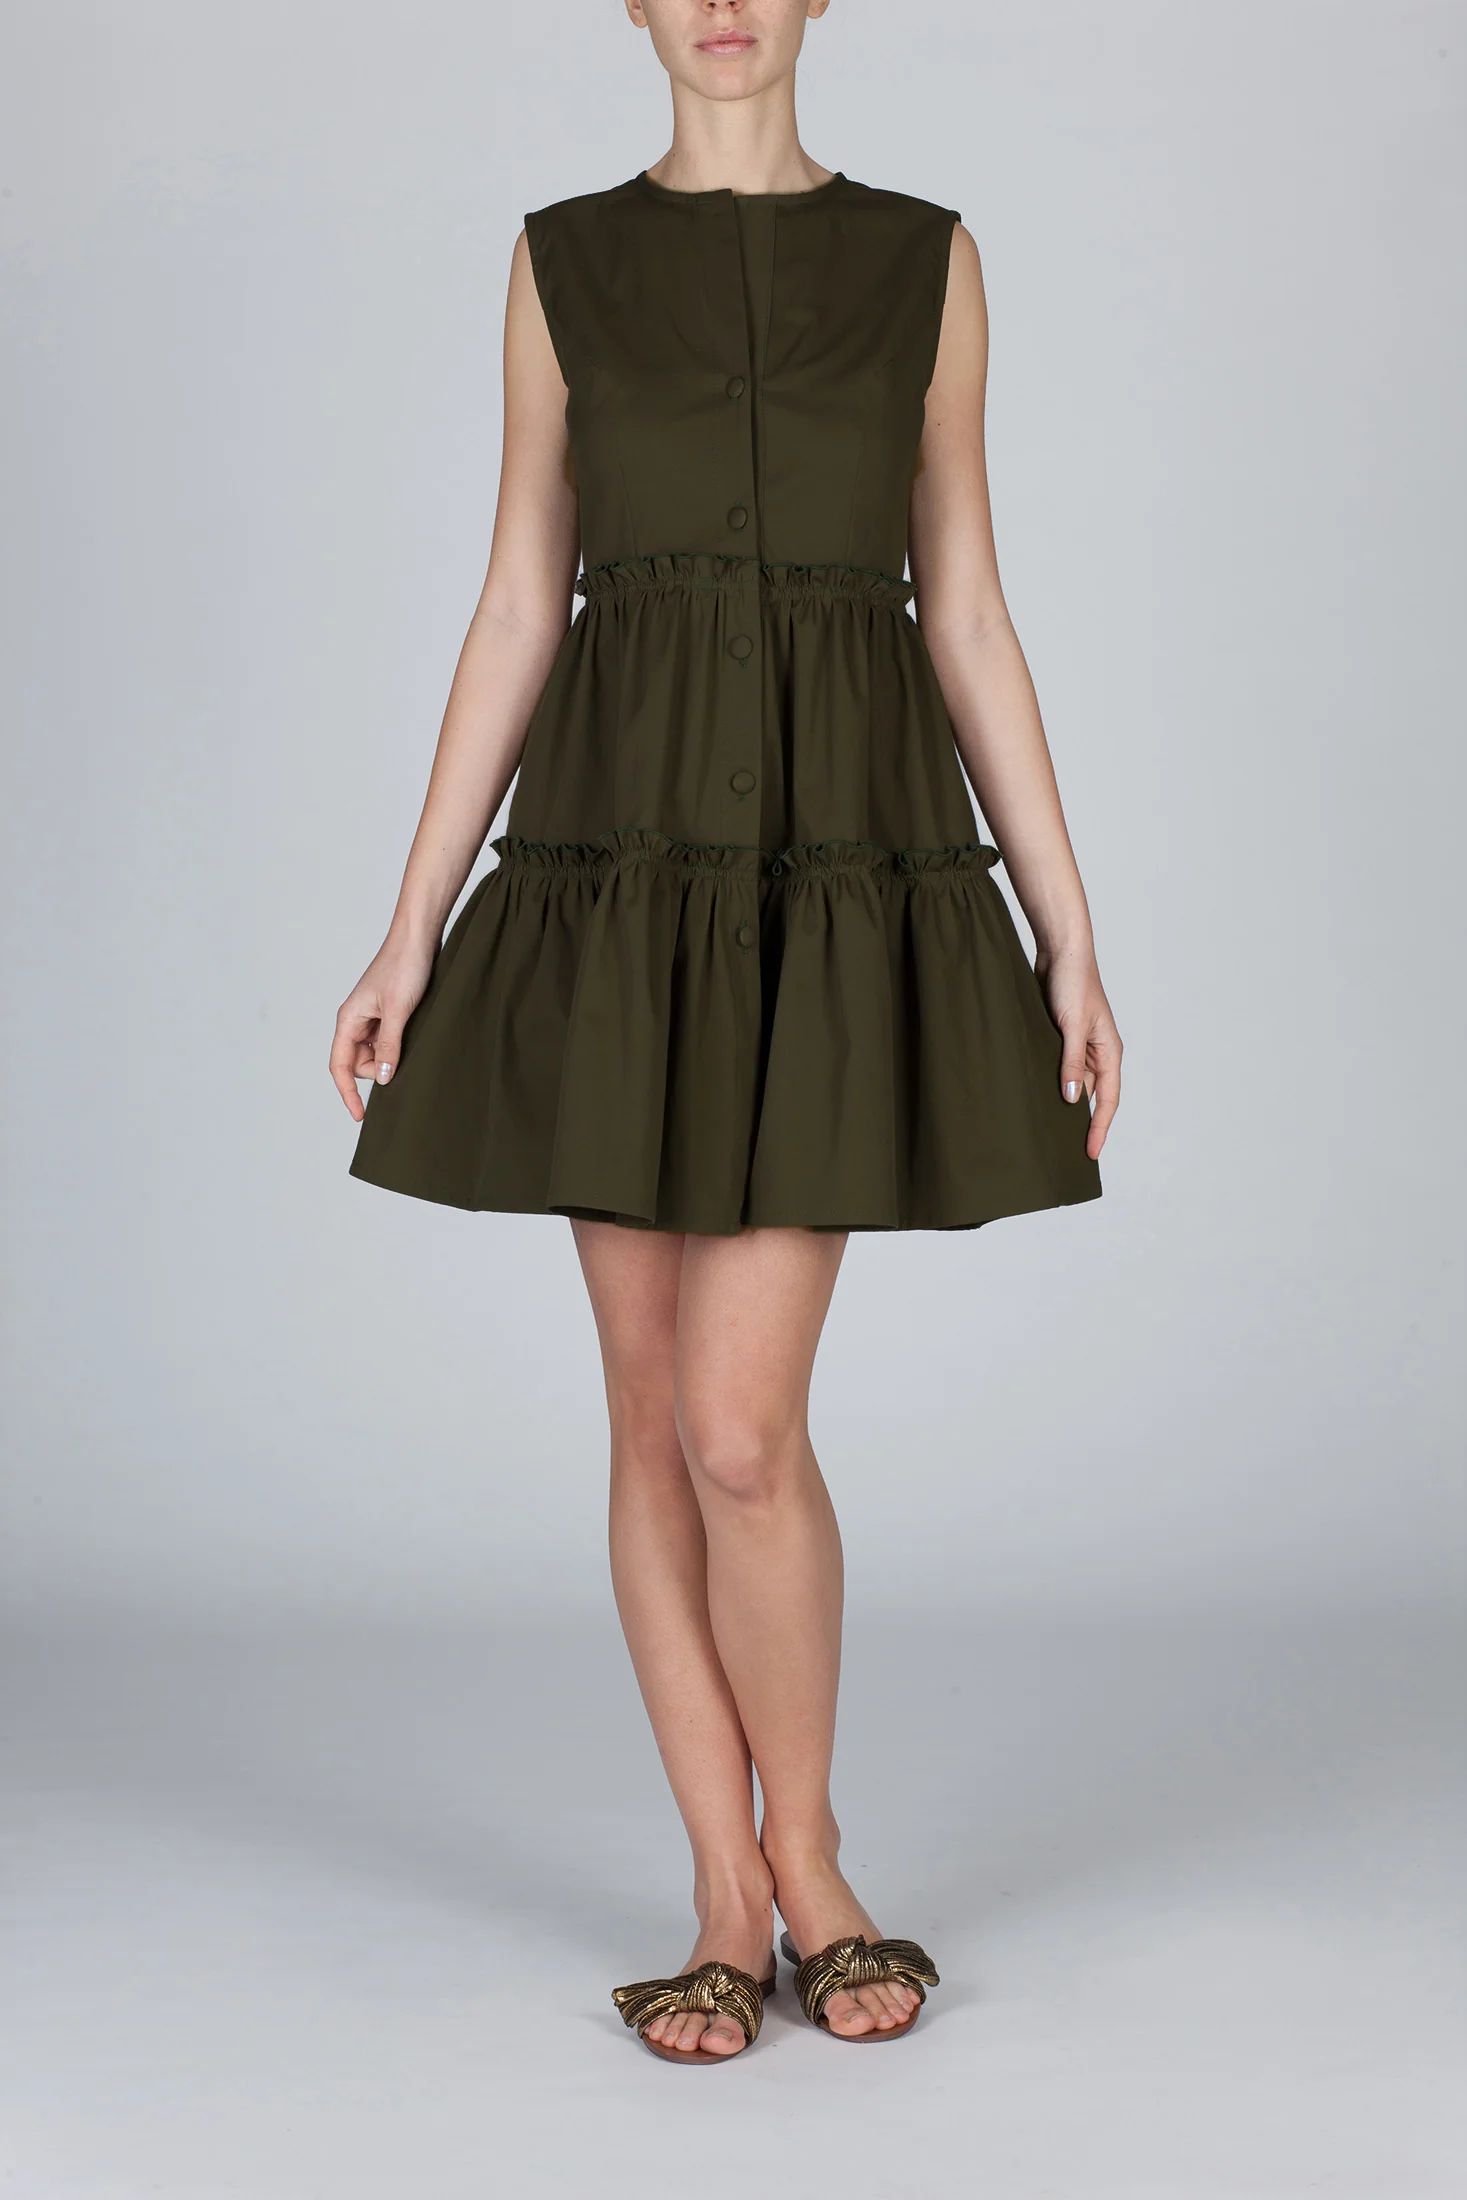 The Elena Dress - Olive Green | Marta Scarampi